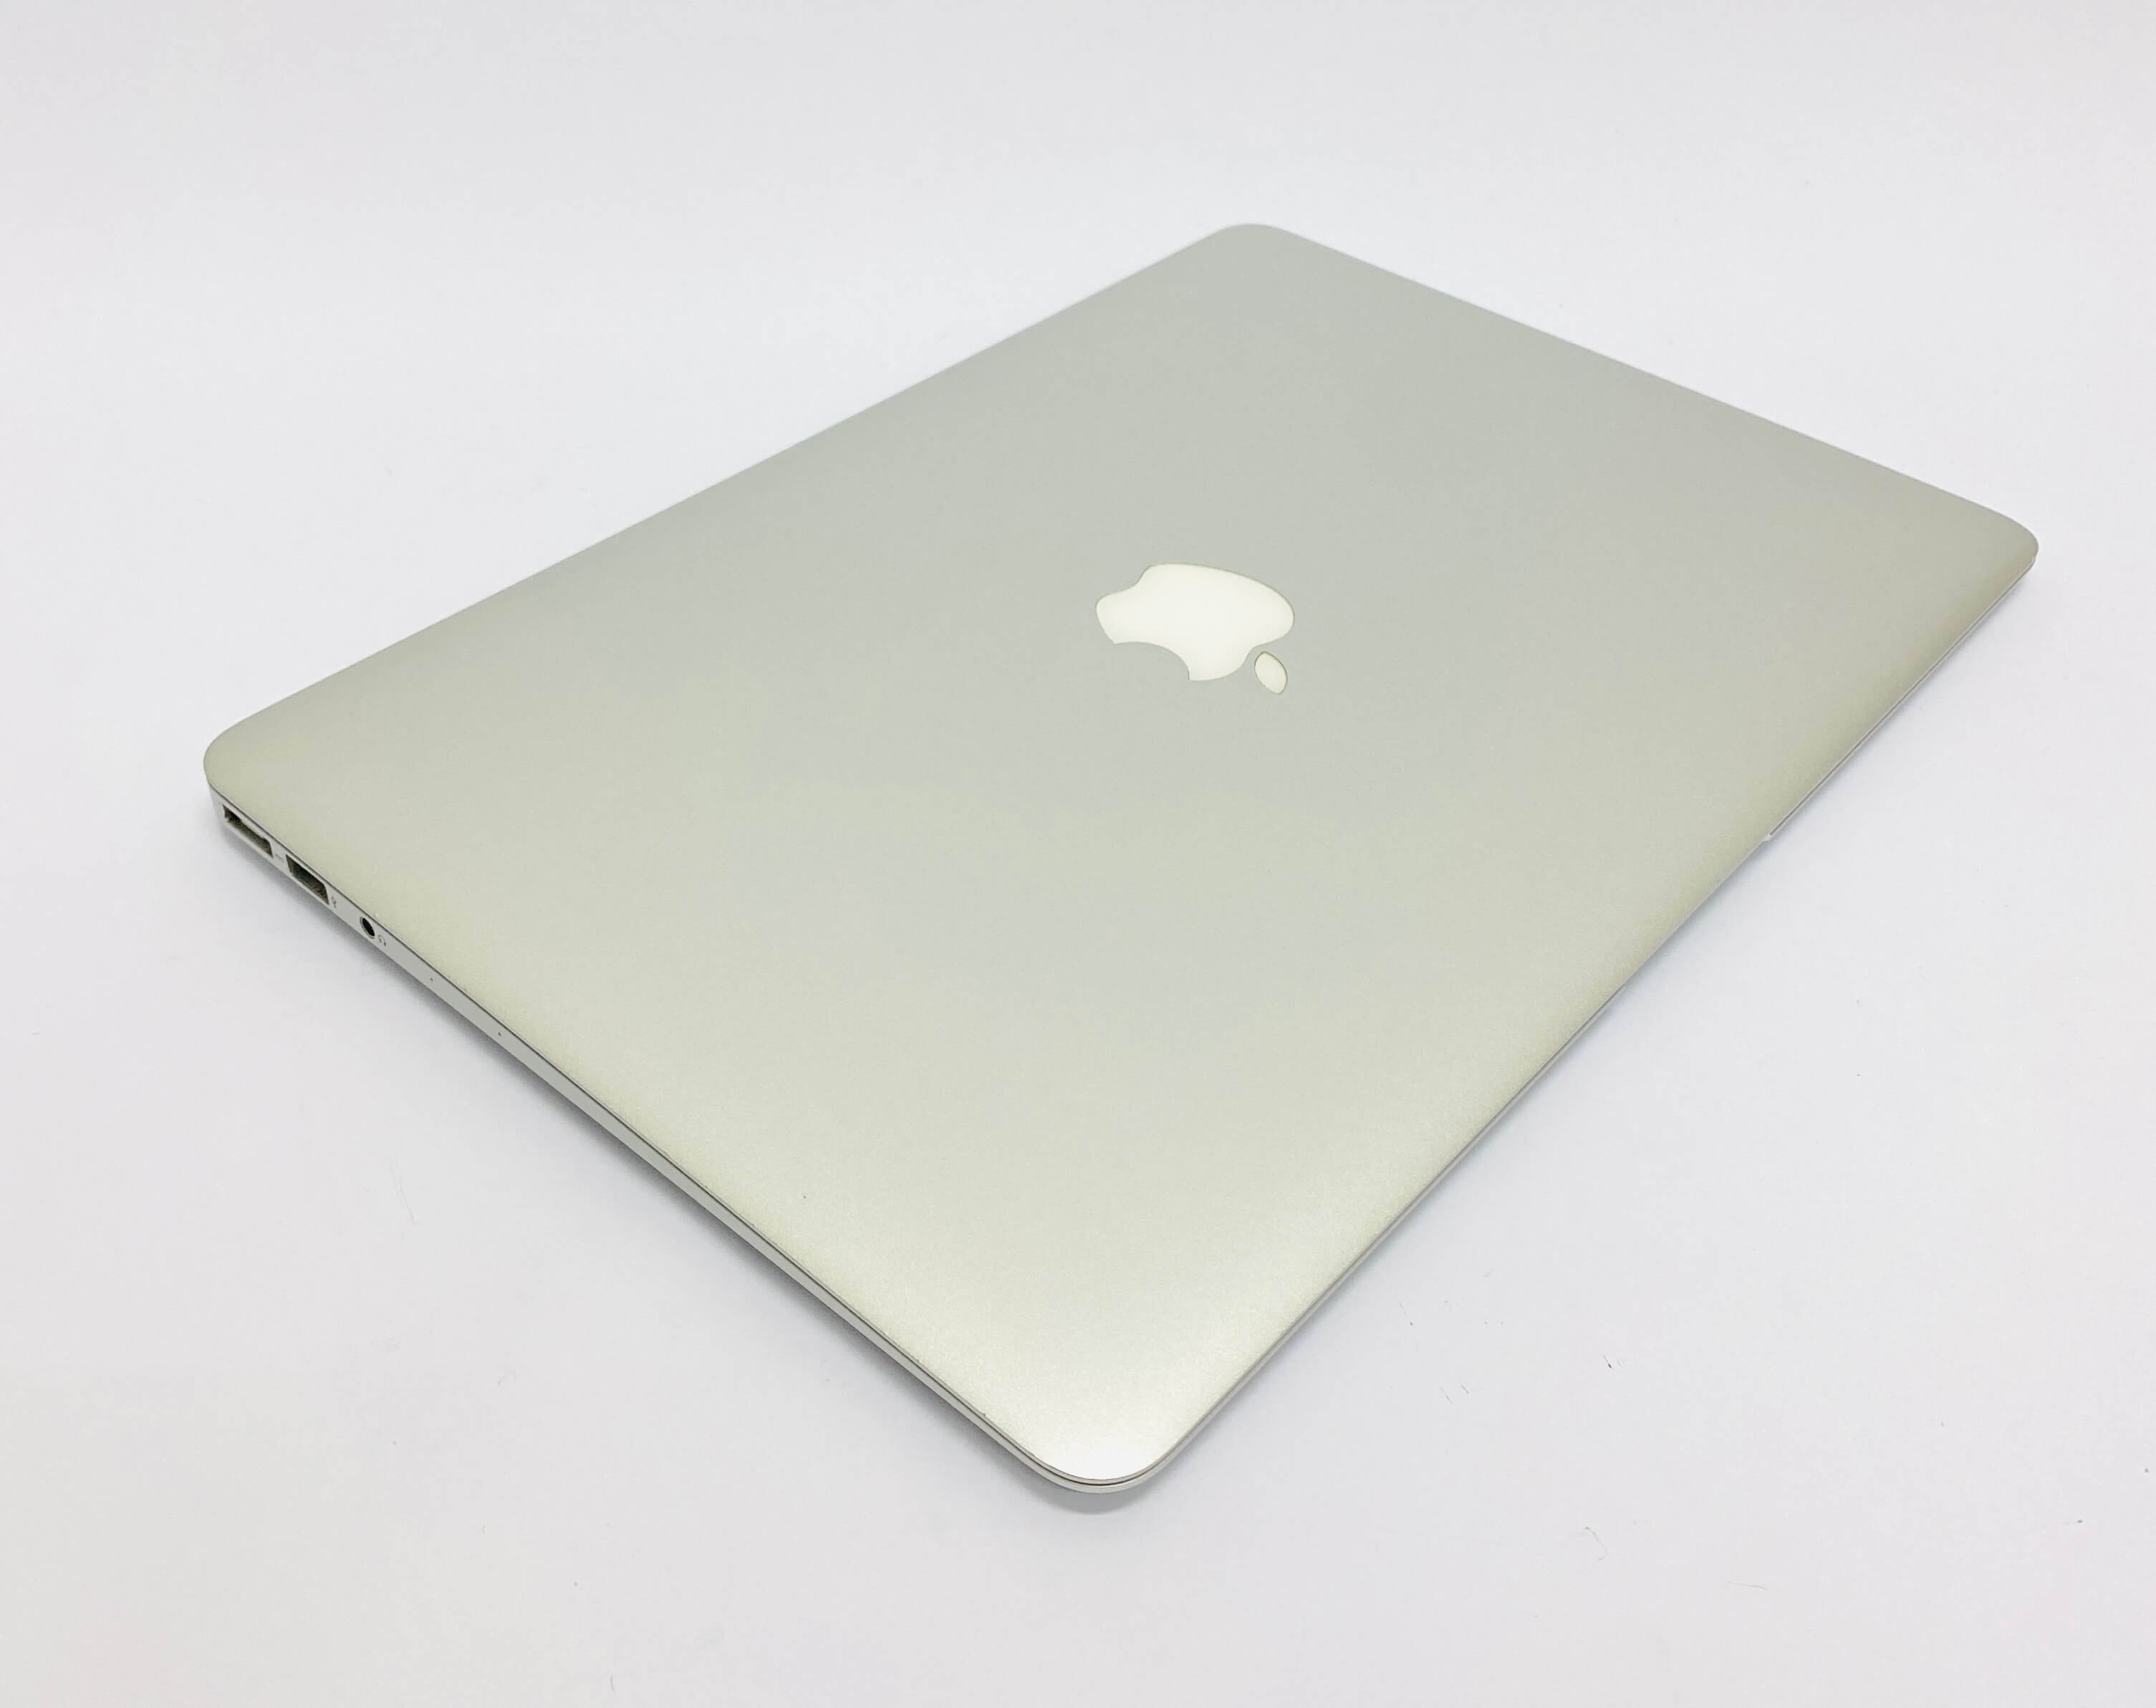 MacBook Air 13'', i5, rok 2015, 8GB RAM, 256GB SSD